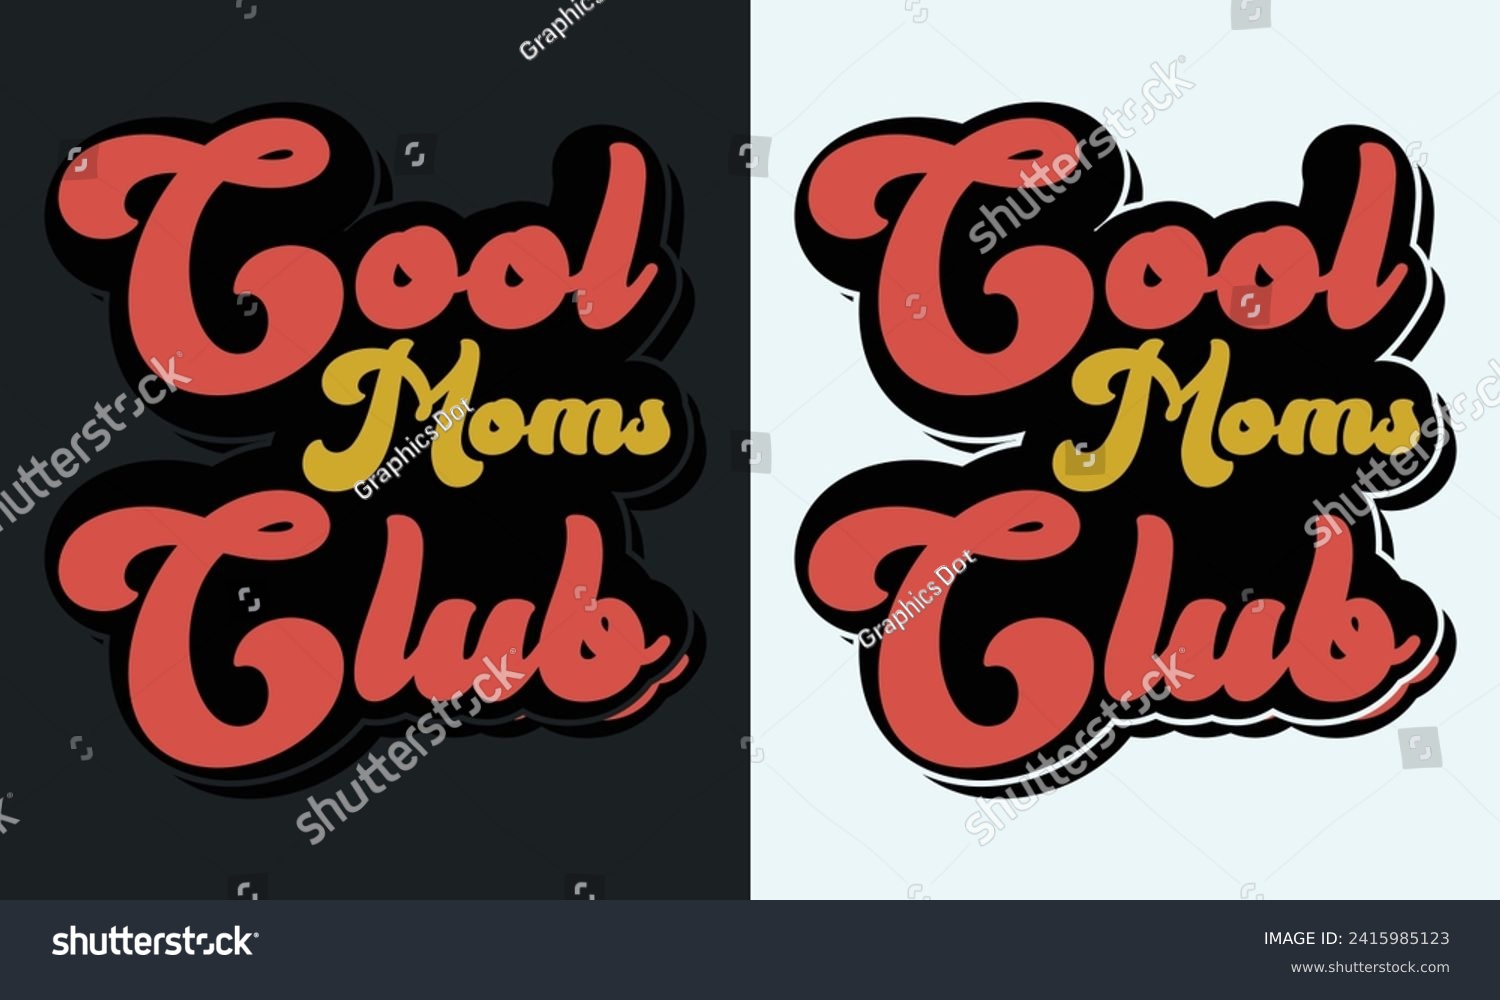 SVG of Cool Moms Club Retro Design,Best Mom Day Design,gift, lover,Cool moms club quote retro wavy colorful Design,Mom Cut File,Happy Mother's Day Design svg